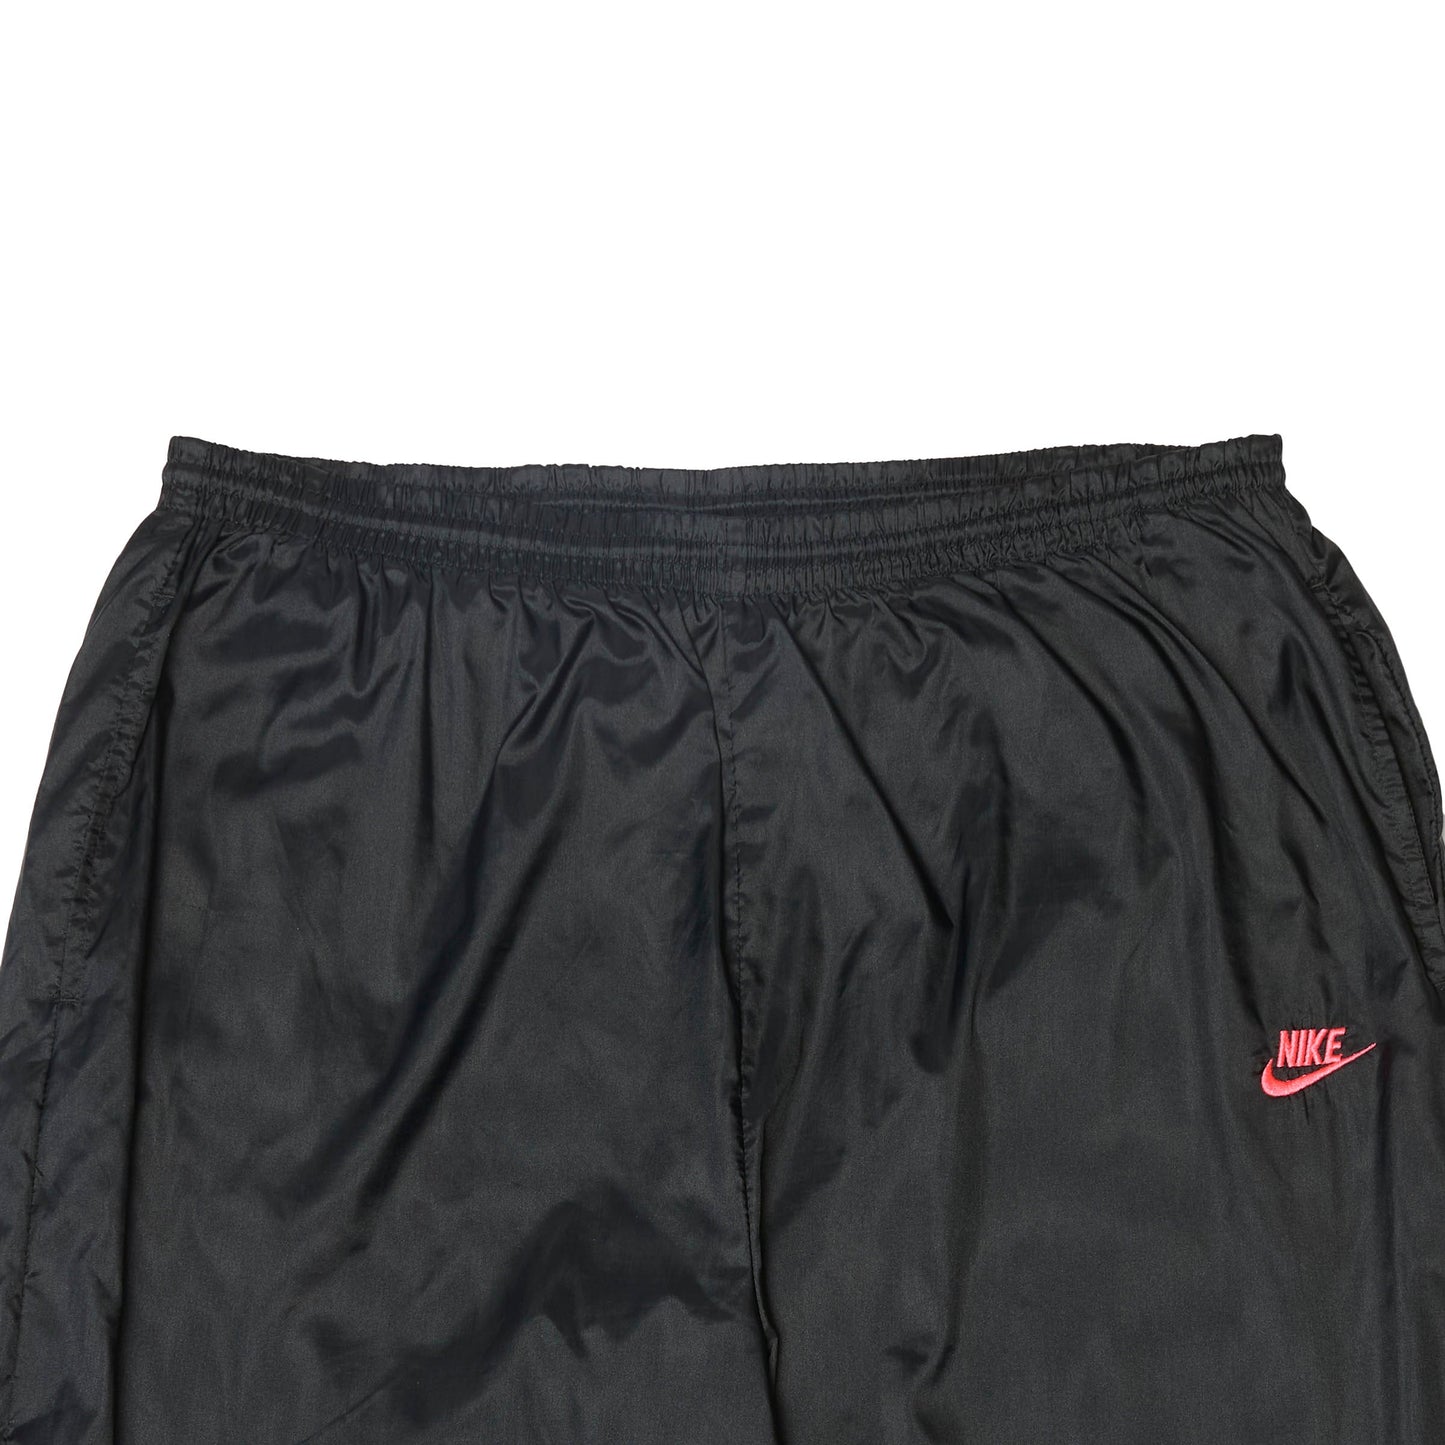 Nike Track Pants - XL